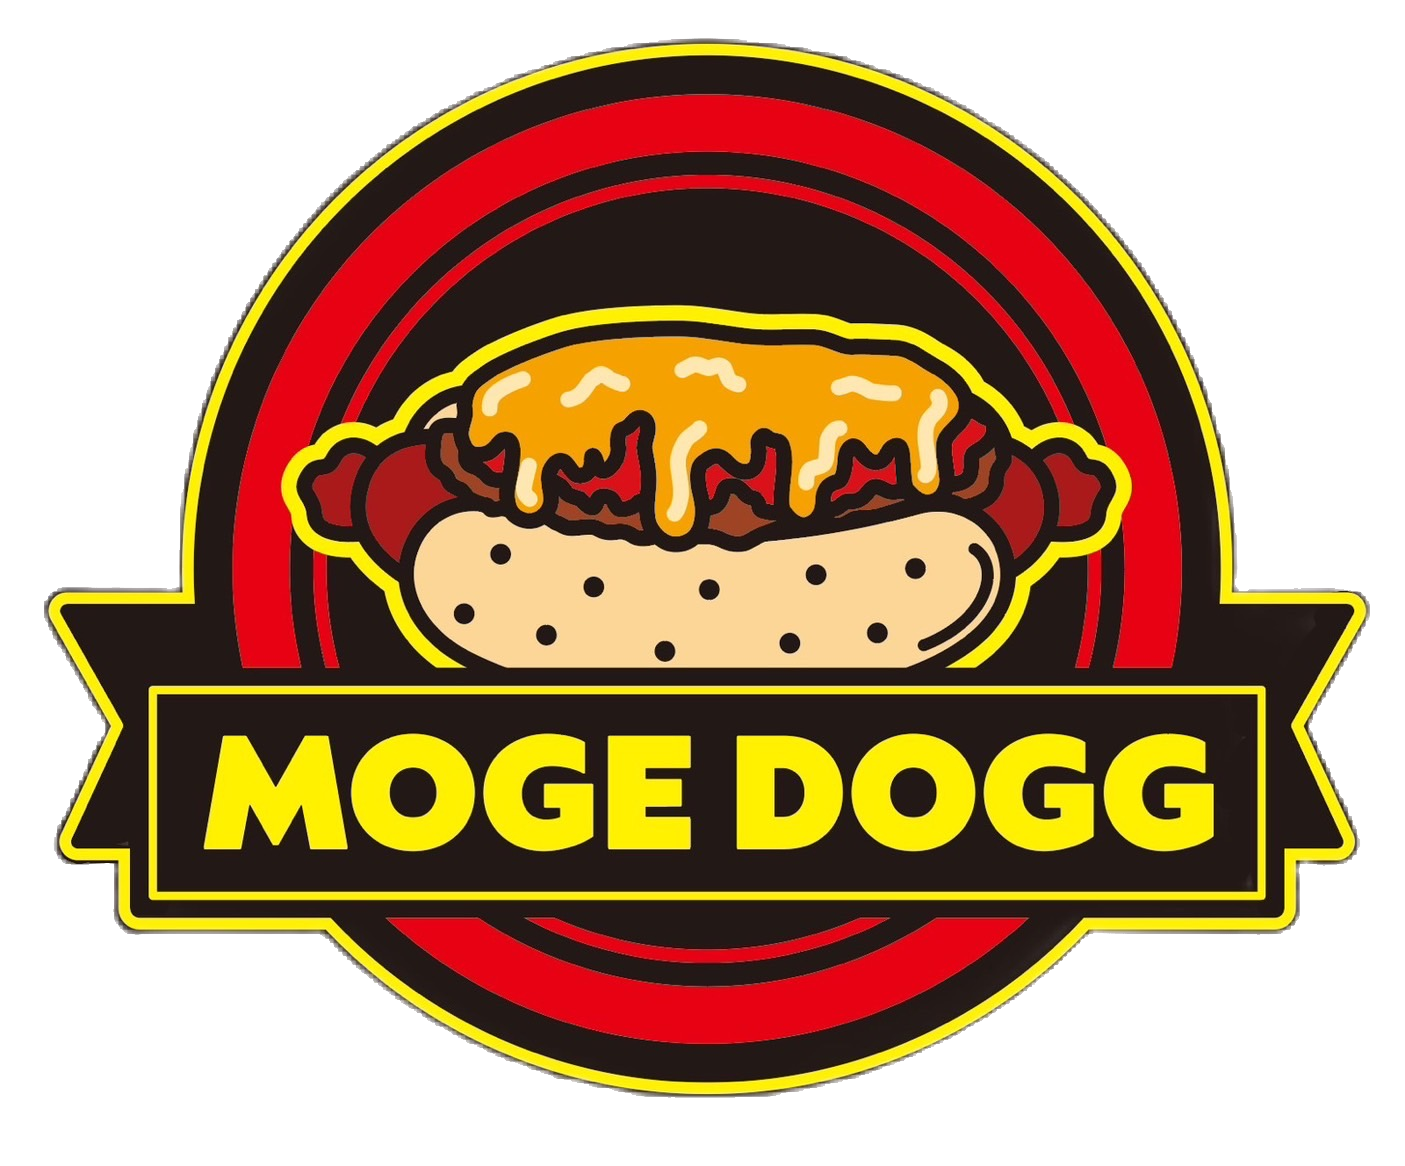 MOGE DOGG